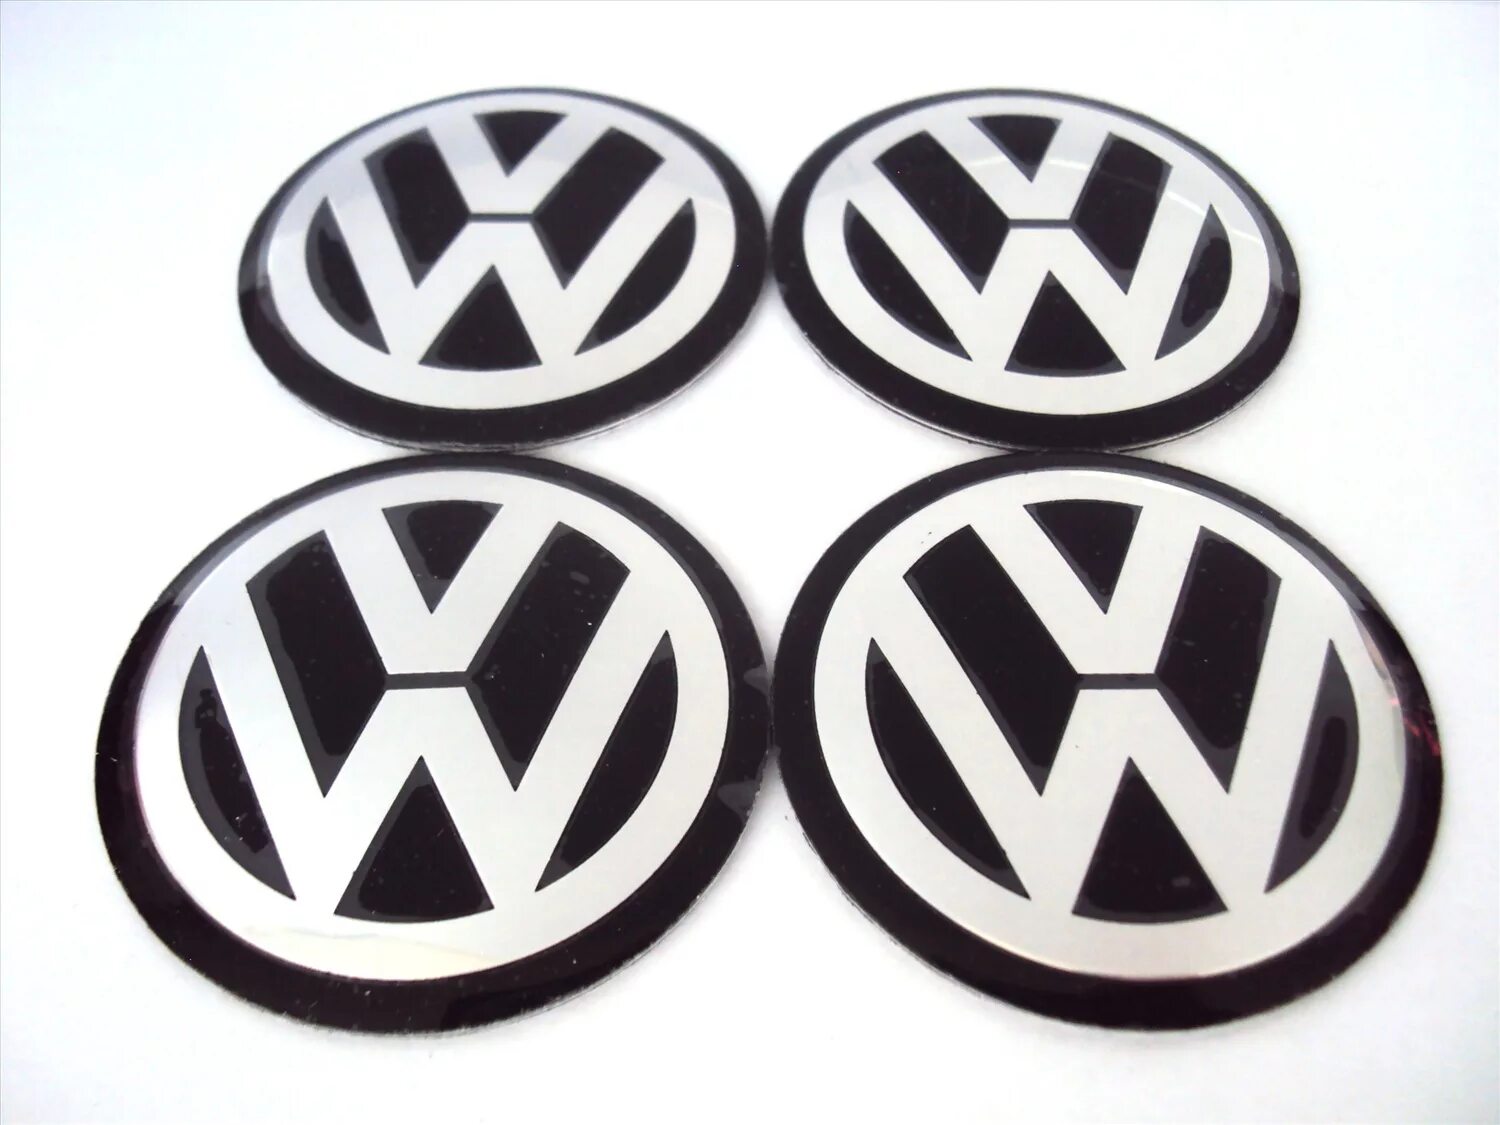 Заглушка диска колесного. Значок VW В колесо. Эмблемы на диски колес. Колпачки на литые диски Фольксваген металл. Логотип колпачка на диск